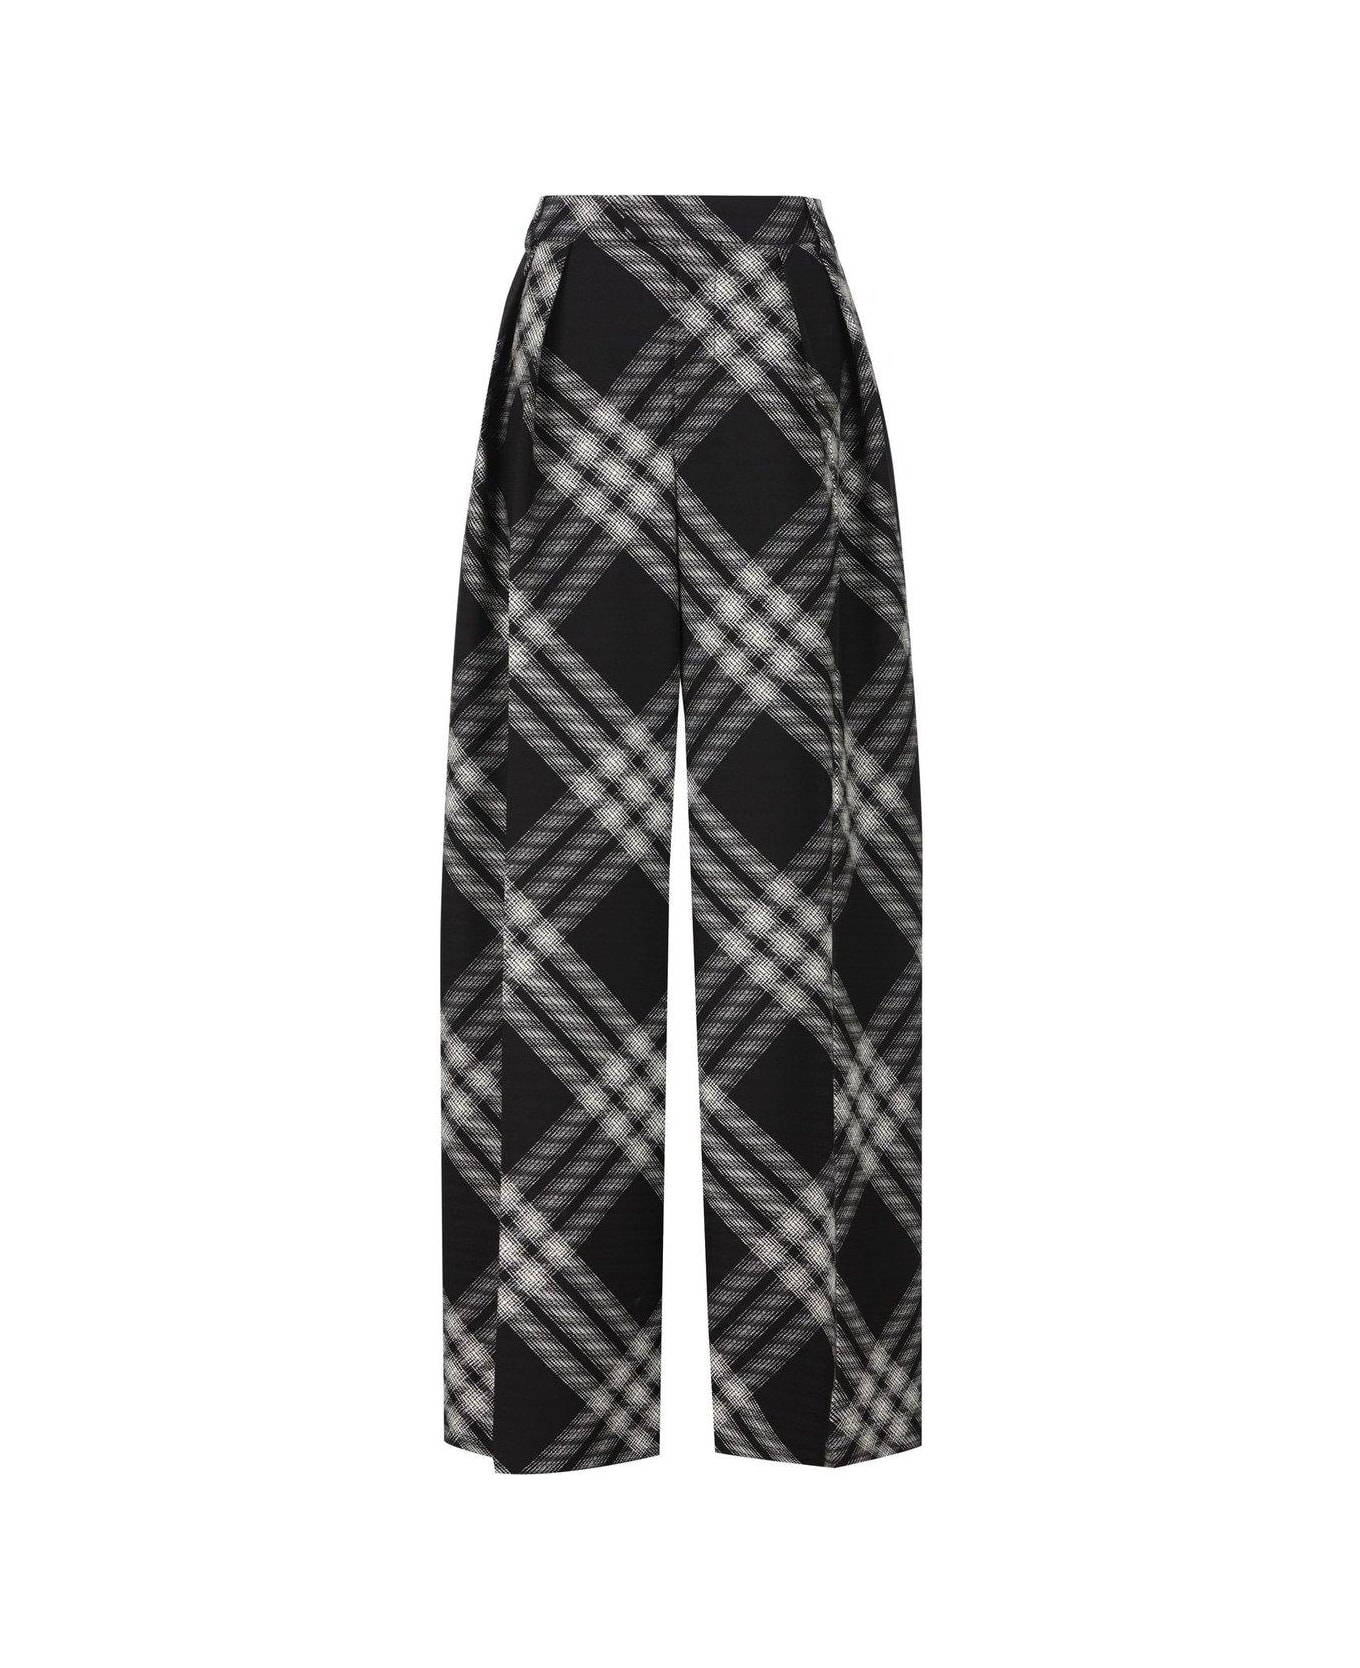 Burberry Vintage Check Wide-leg Trousers - Monochrome Ip Check